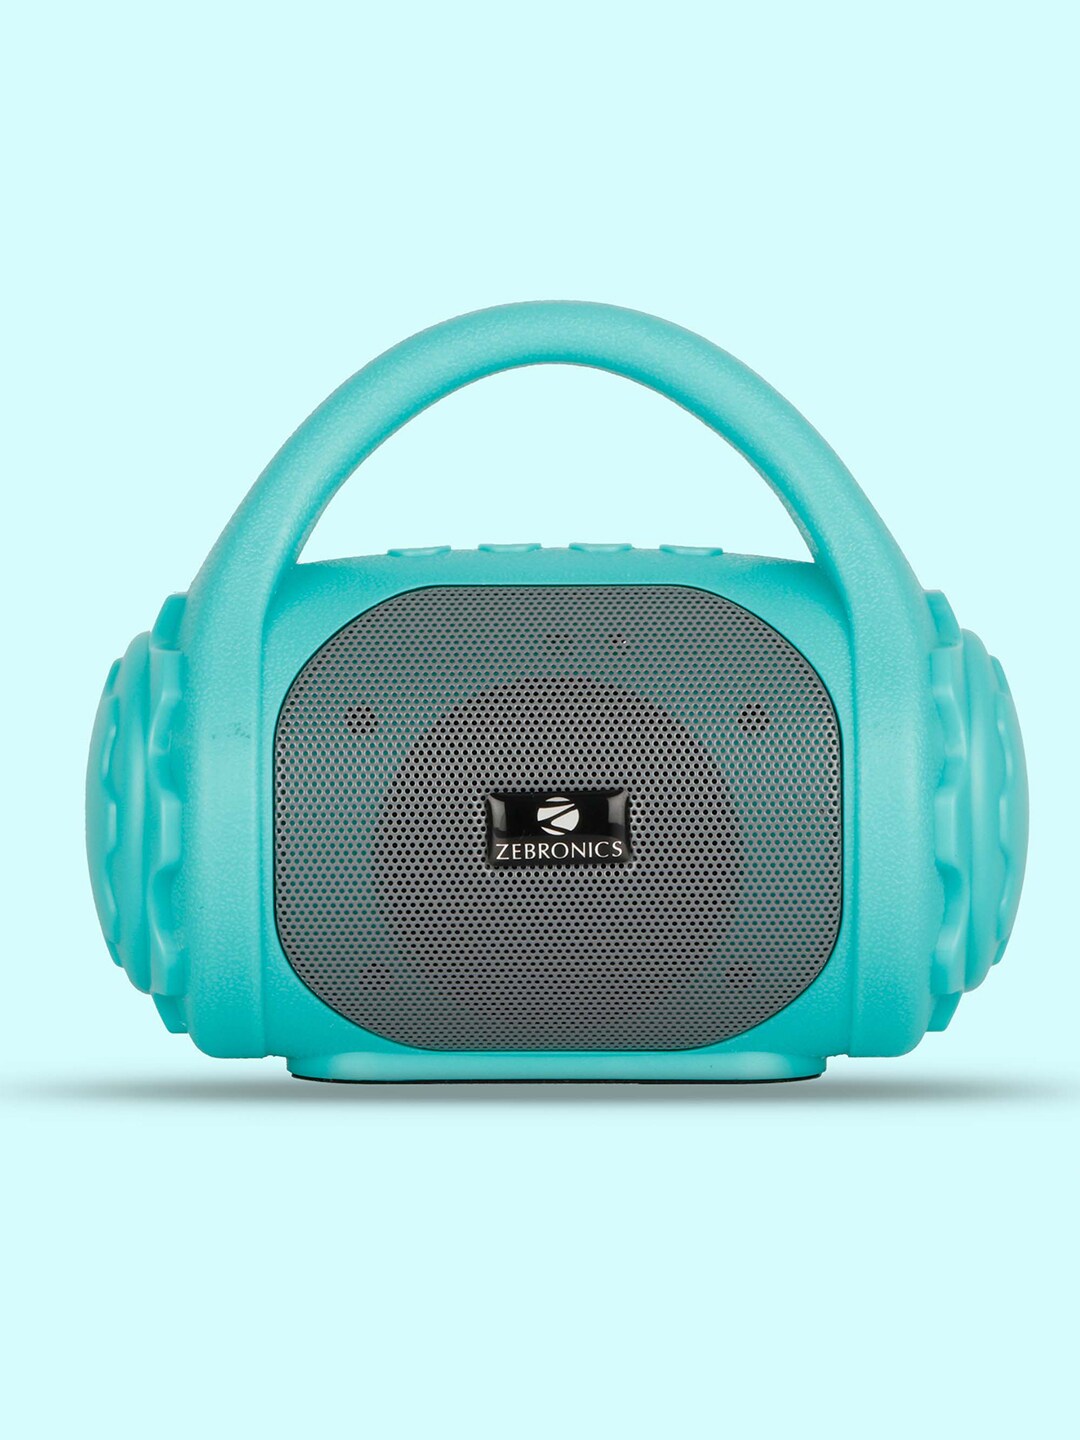 ZEBRONICS Zeb-County Wireless Bluetooth Portable Speaker - Sea Green Price in India